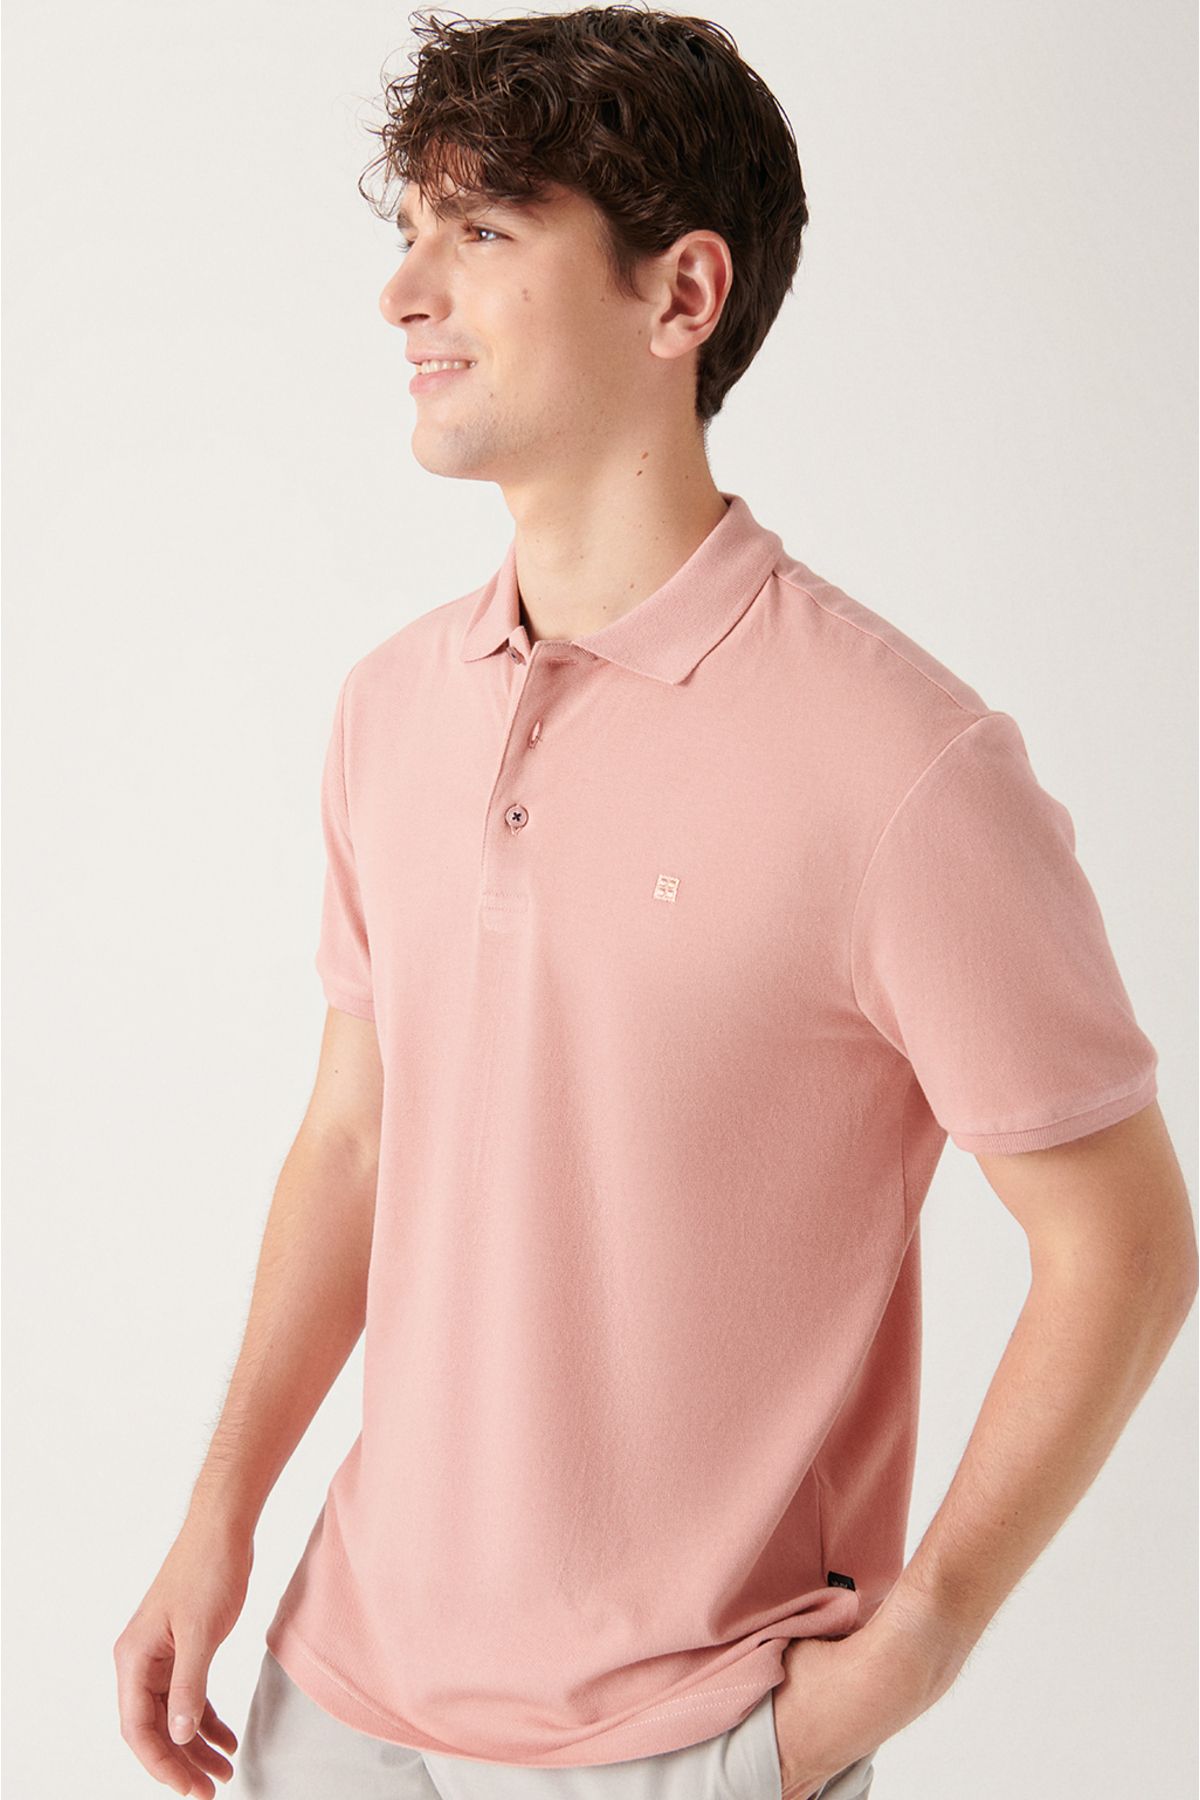 Avva تی شرت یقه دار مردانه داستی رز 100% پنبه خنک نگه داشتن تناسب استاندارد با برش معمولی تیشرت پولو E001004